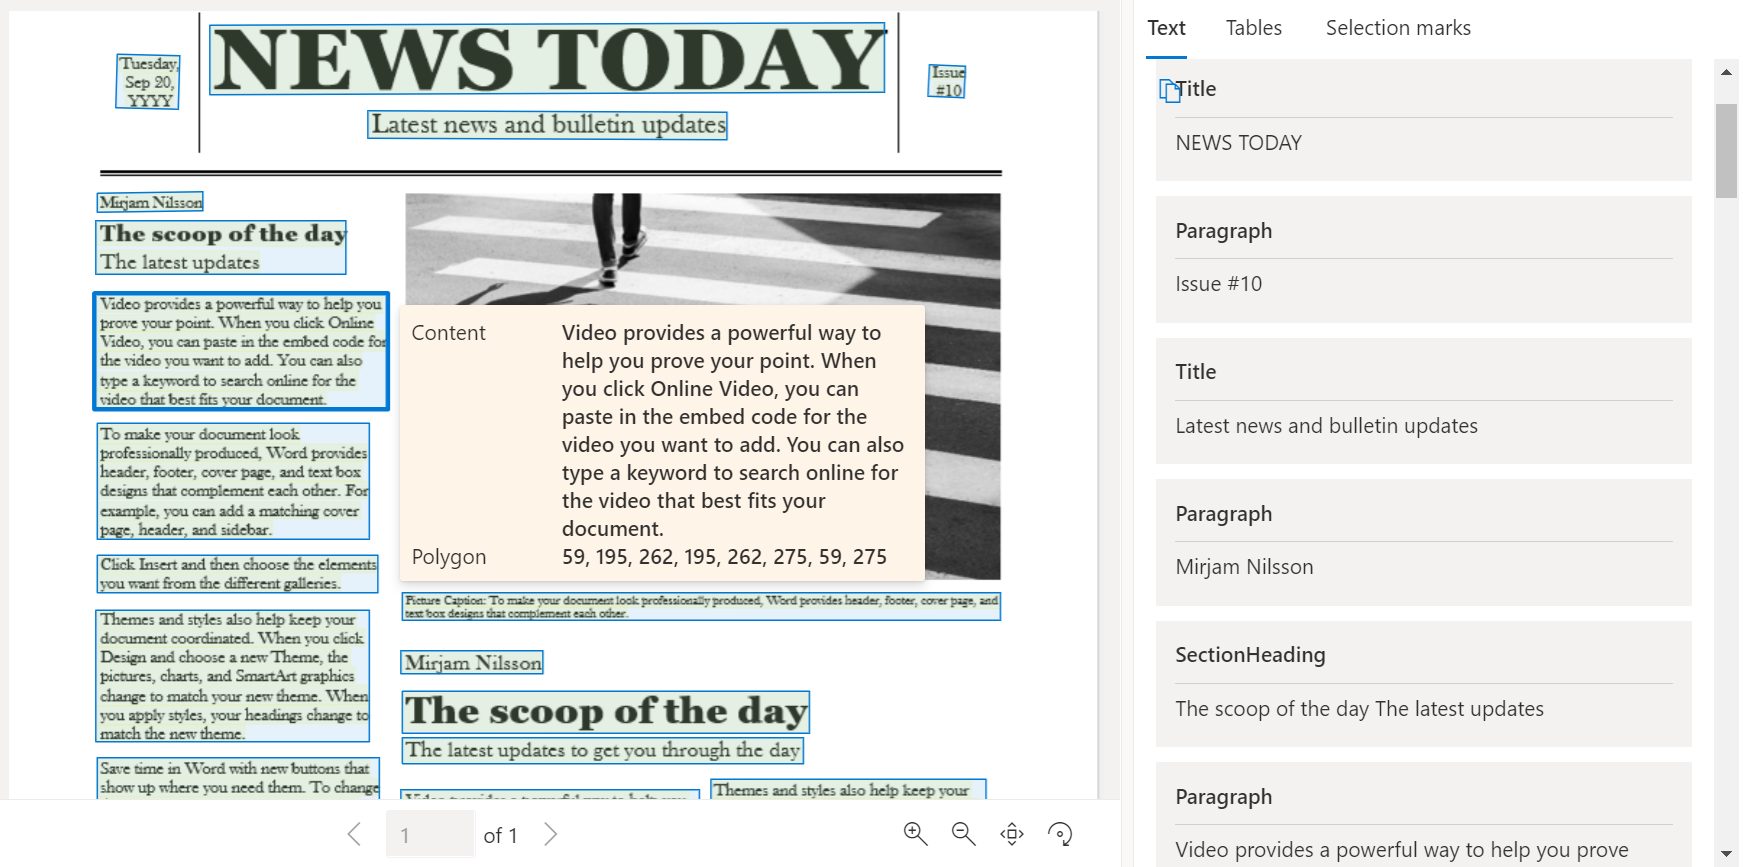 Screenshot of sample newspaper page processed using Document Intelligence Studio.